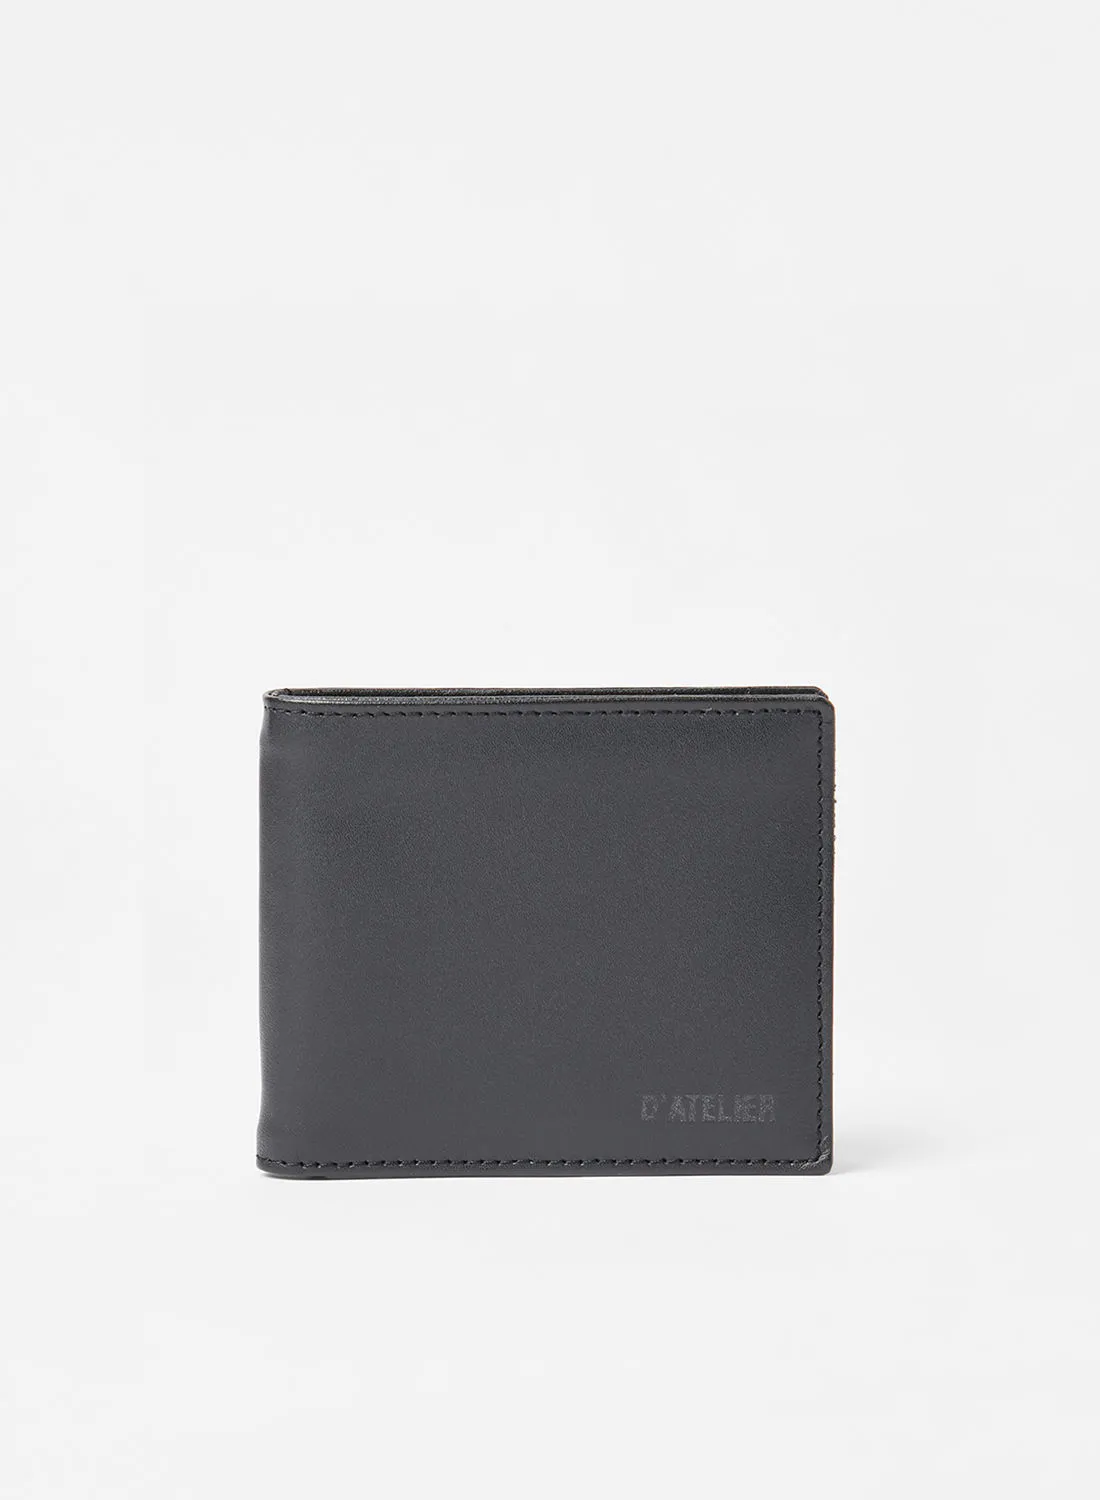 Sivvi x D'Atelier Leather Bi-Fold Wallet Black